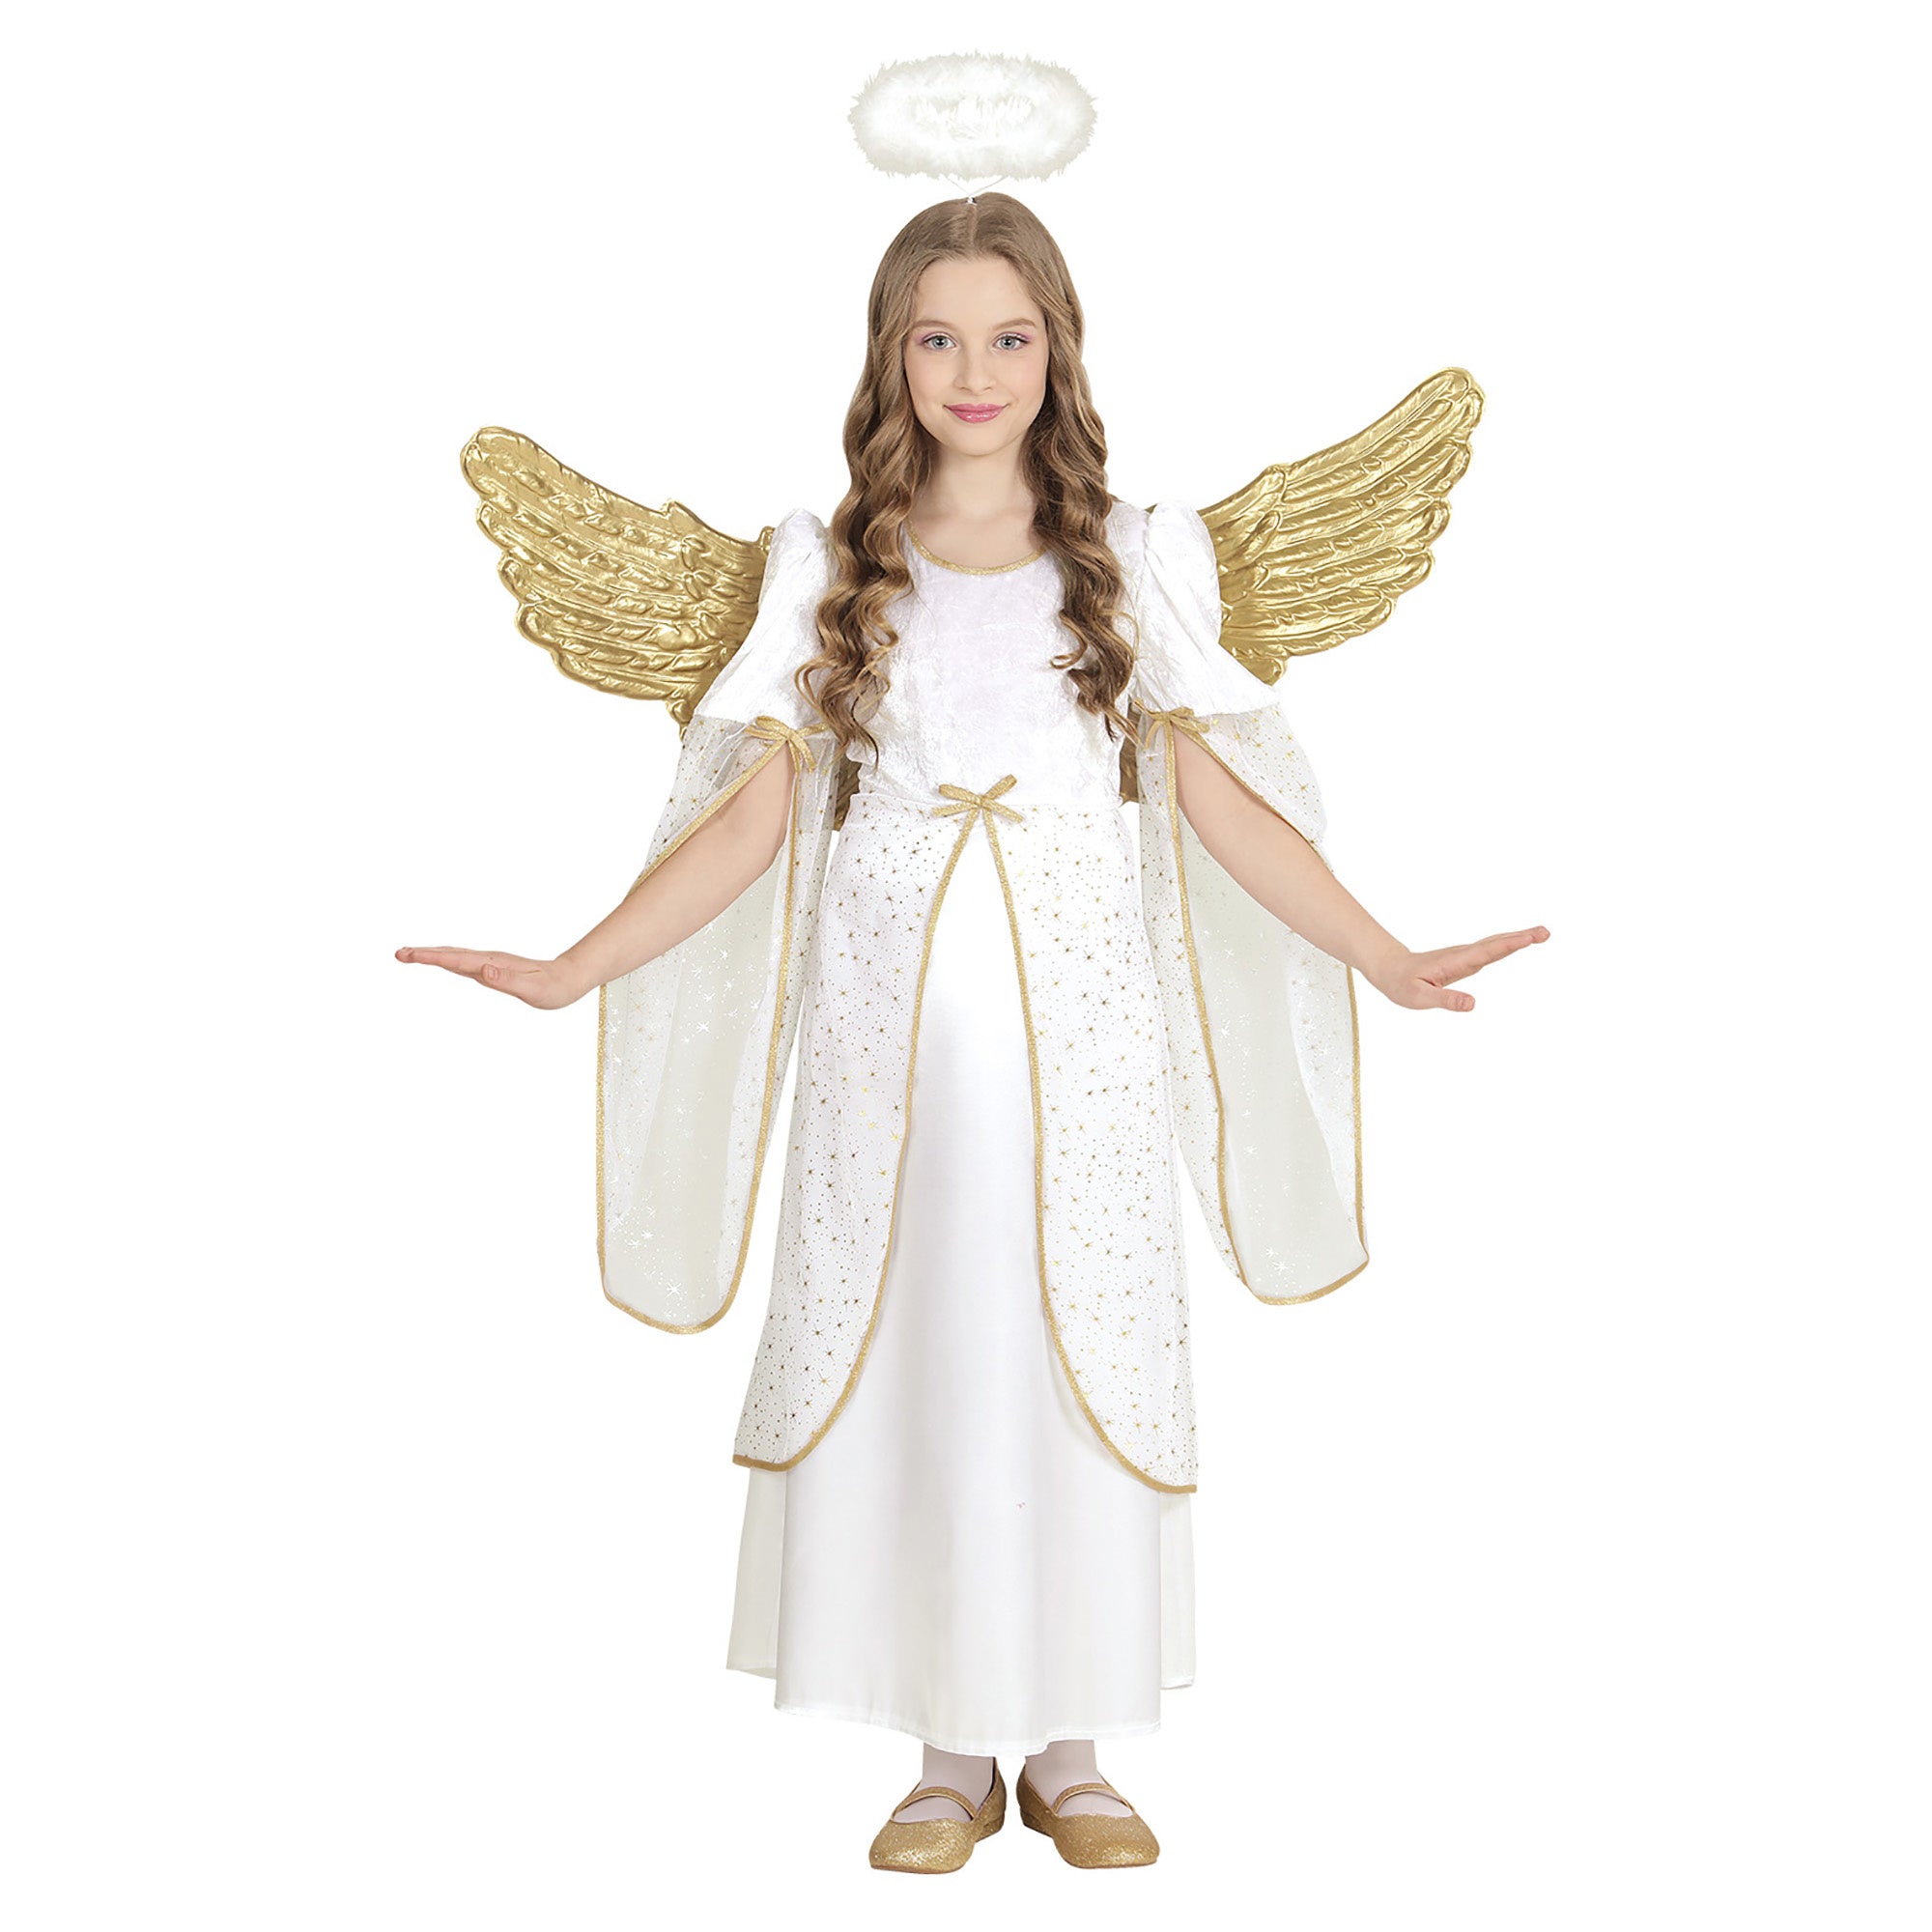 Widmann - Engel Kostuum - Hemelse Engel Kind - Meisje - wit / beige - Maat 128 - Carnavalskleding - Verkleedkleding